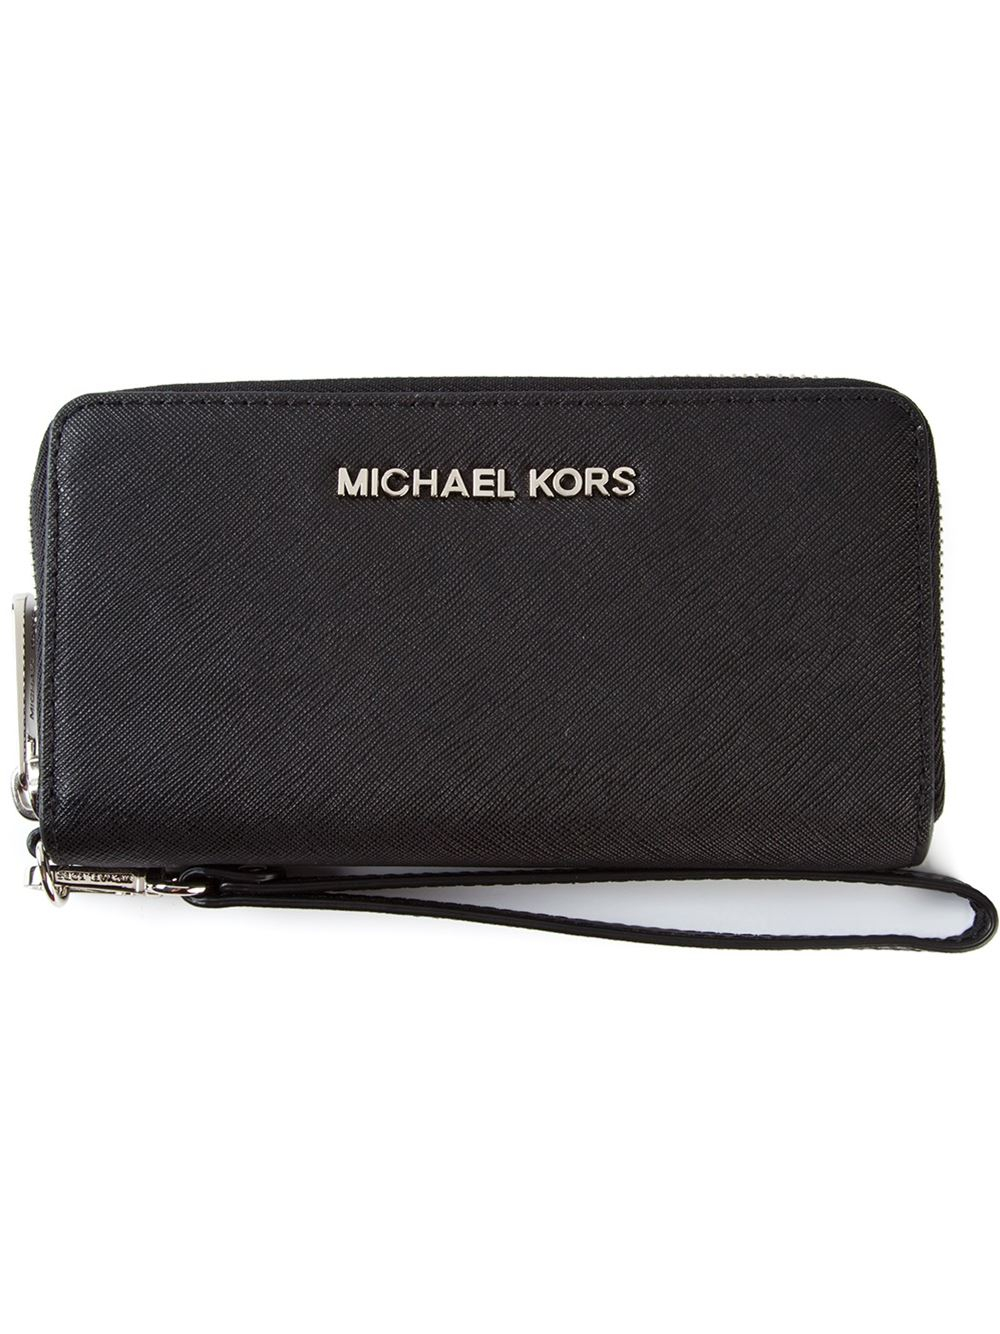 Michael michael kors 'jet Set Travel' Phone Wallet in